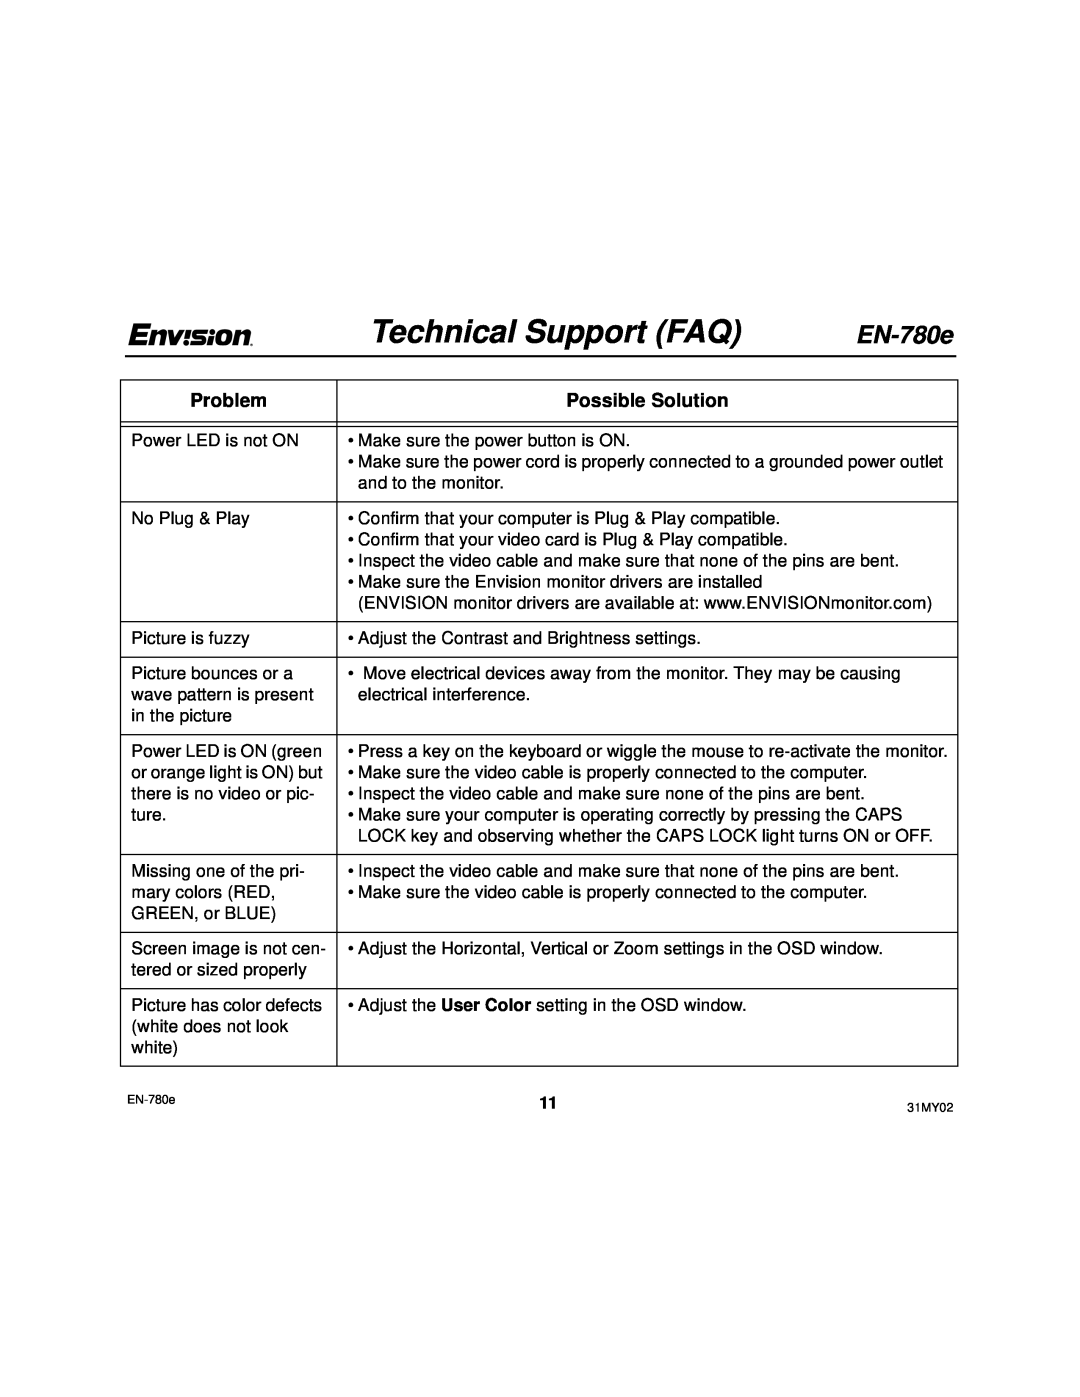 Envision Peripherals EN-780e user manual Technical Support FAQ, Problem, Possible Solution 